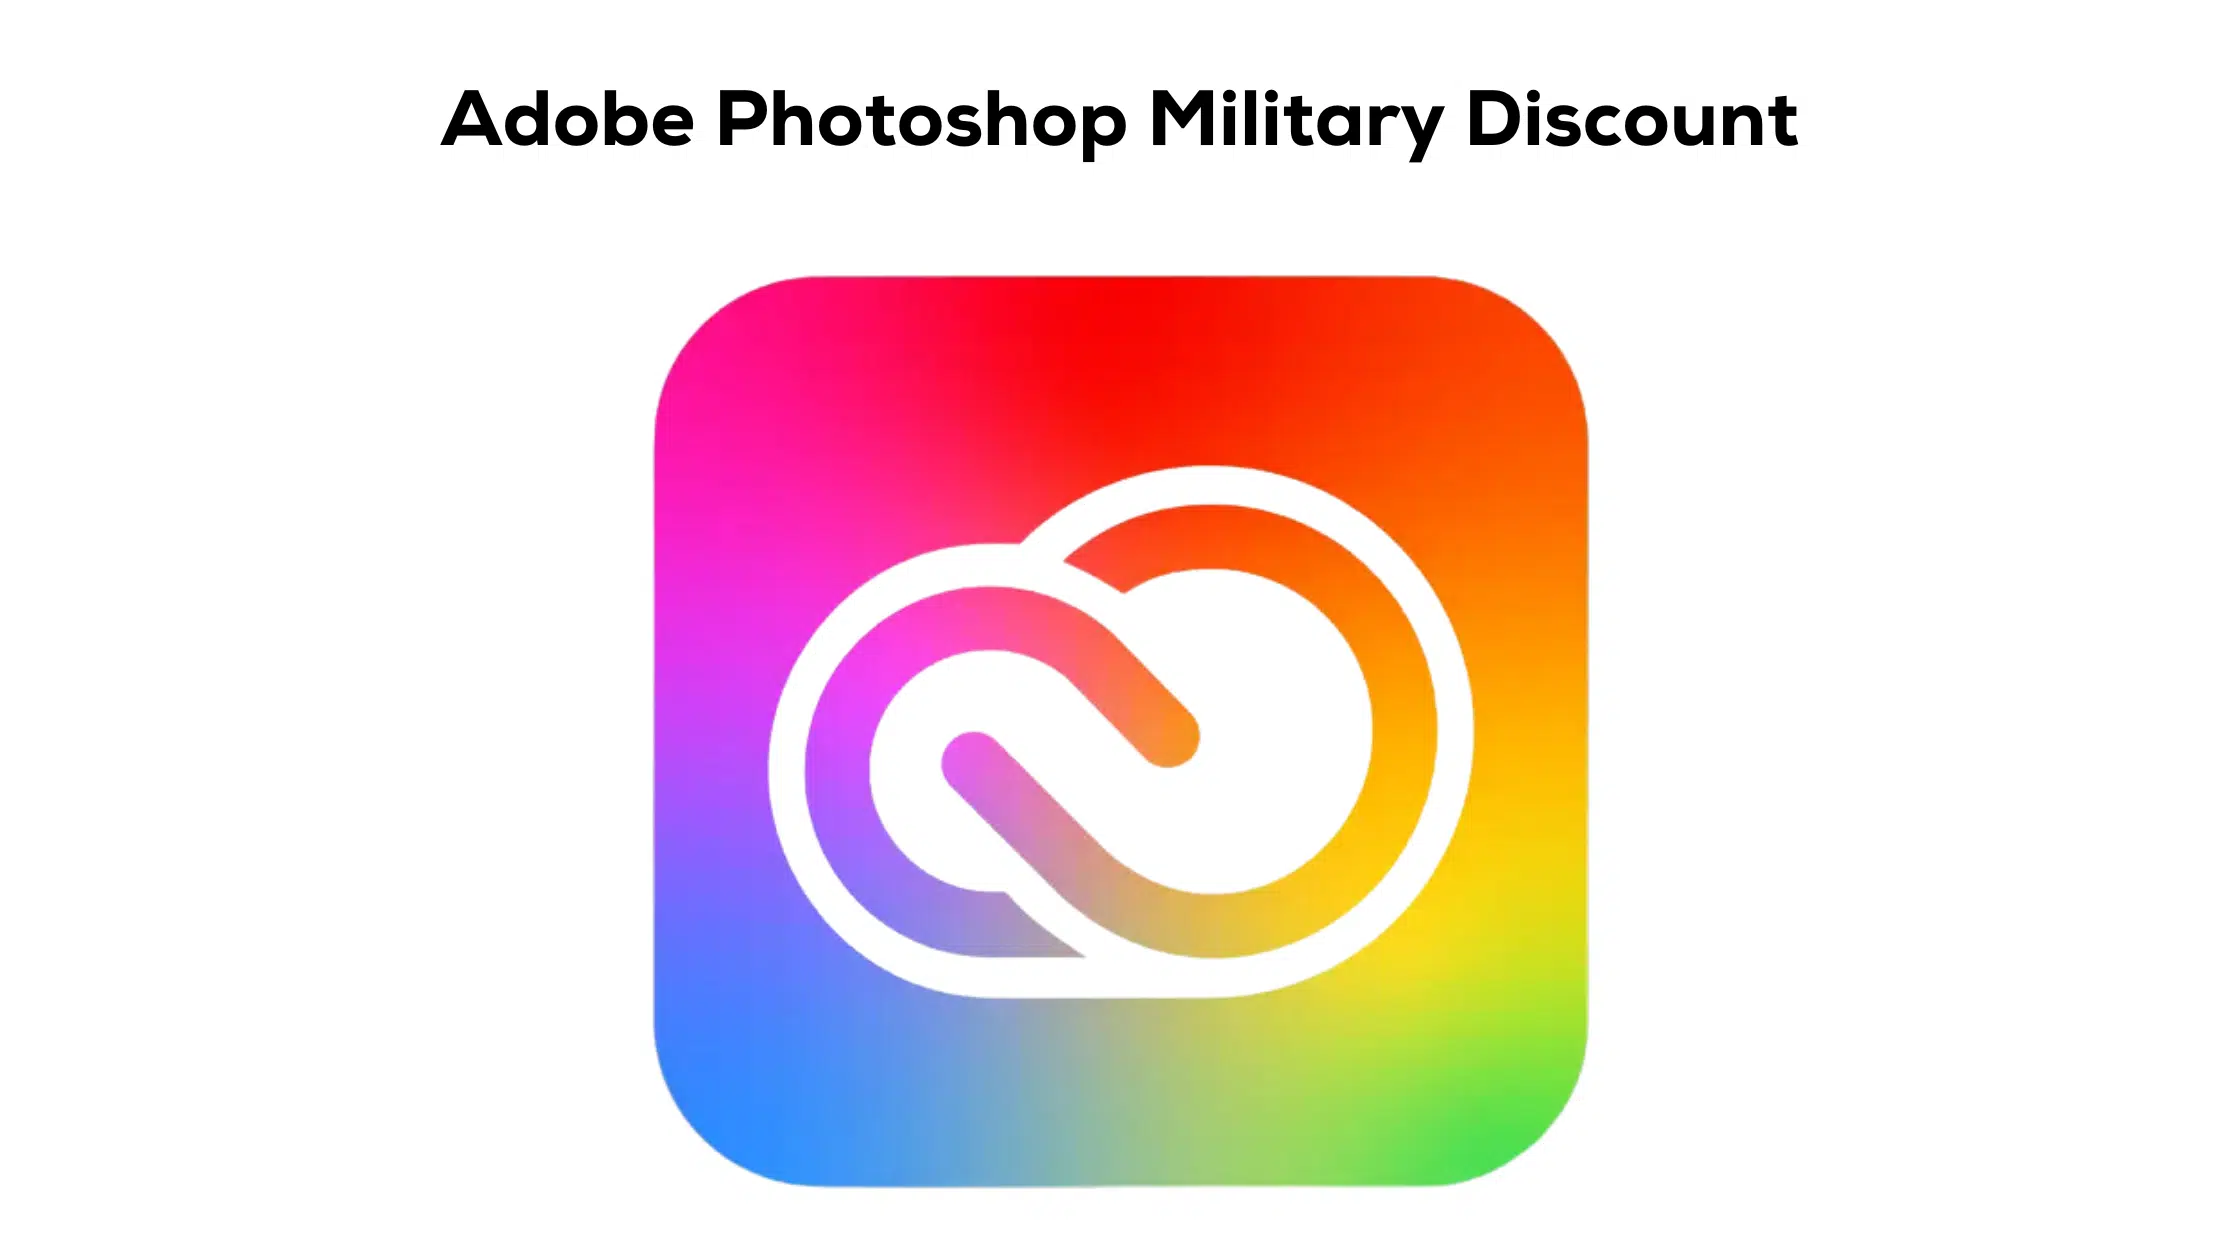 Adobe Photoshop Military Discount